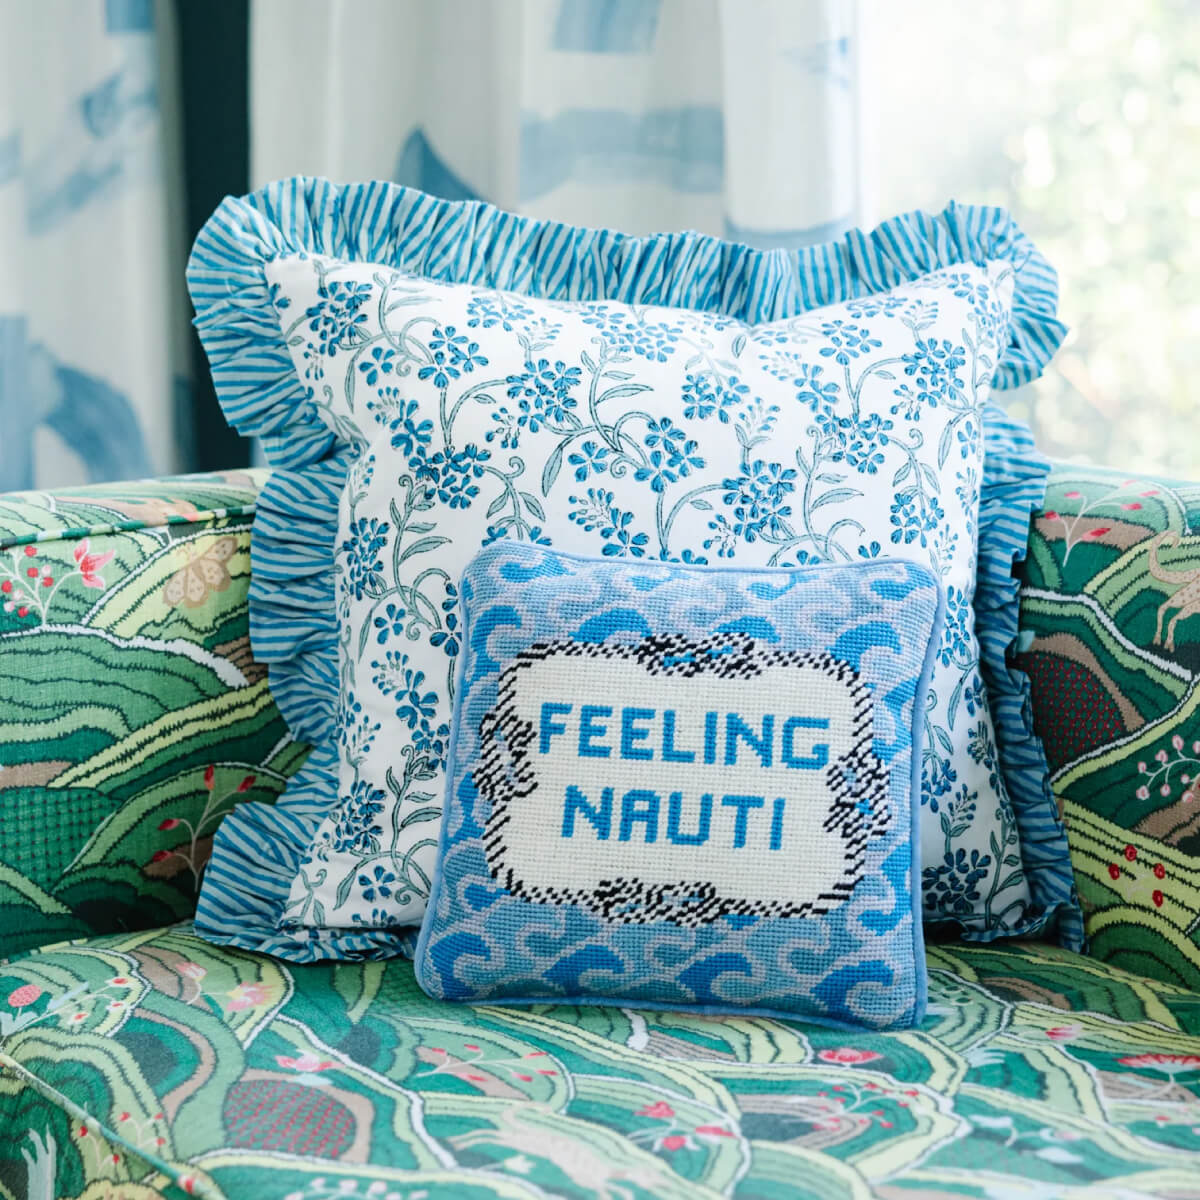 Furbish Studio Nauti Needlepoint Pillow blue front | MILK MONEY milkmoney.co | white elephant gift ideas, gift, mother's day gift ideas, white elephant gift, gift shops near me, cute home decor, mother's day gift, cute home accents, handmade in USA, elegant home decor